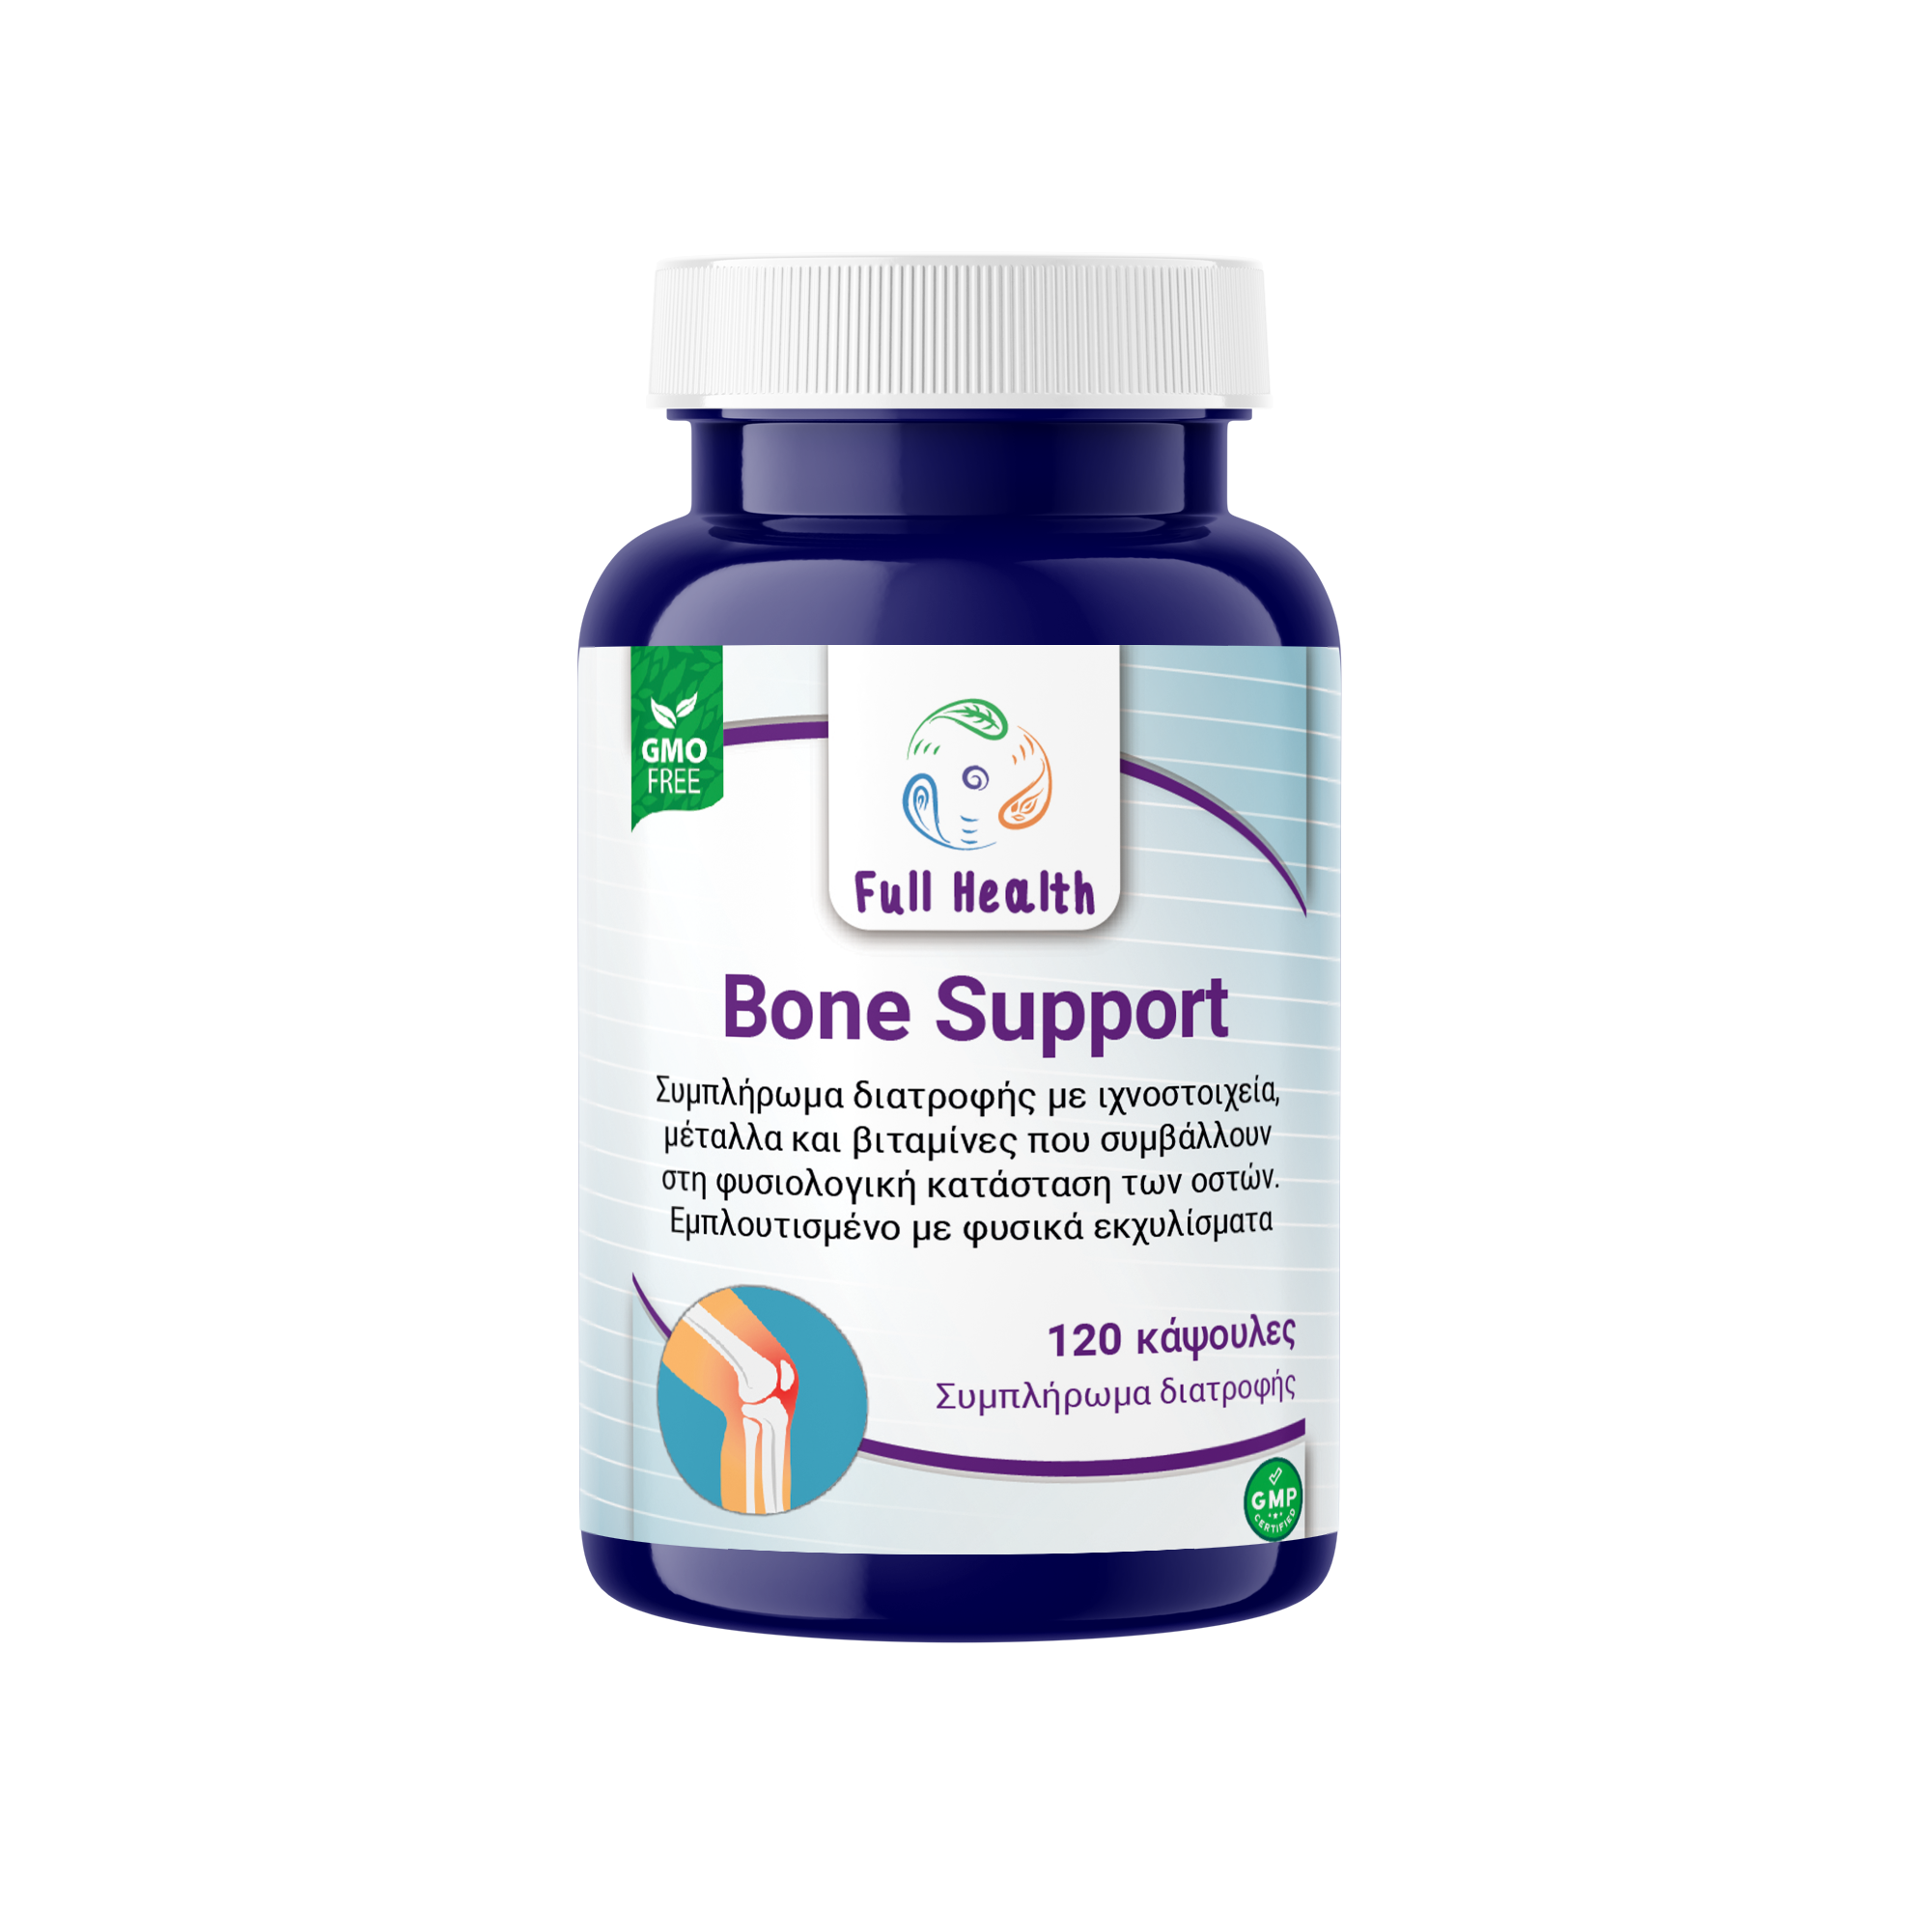 Full Health Bone Support 120 caps (Συμπλήρωμα διατροφής για την υποστήριξη της υγείας των οστών)